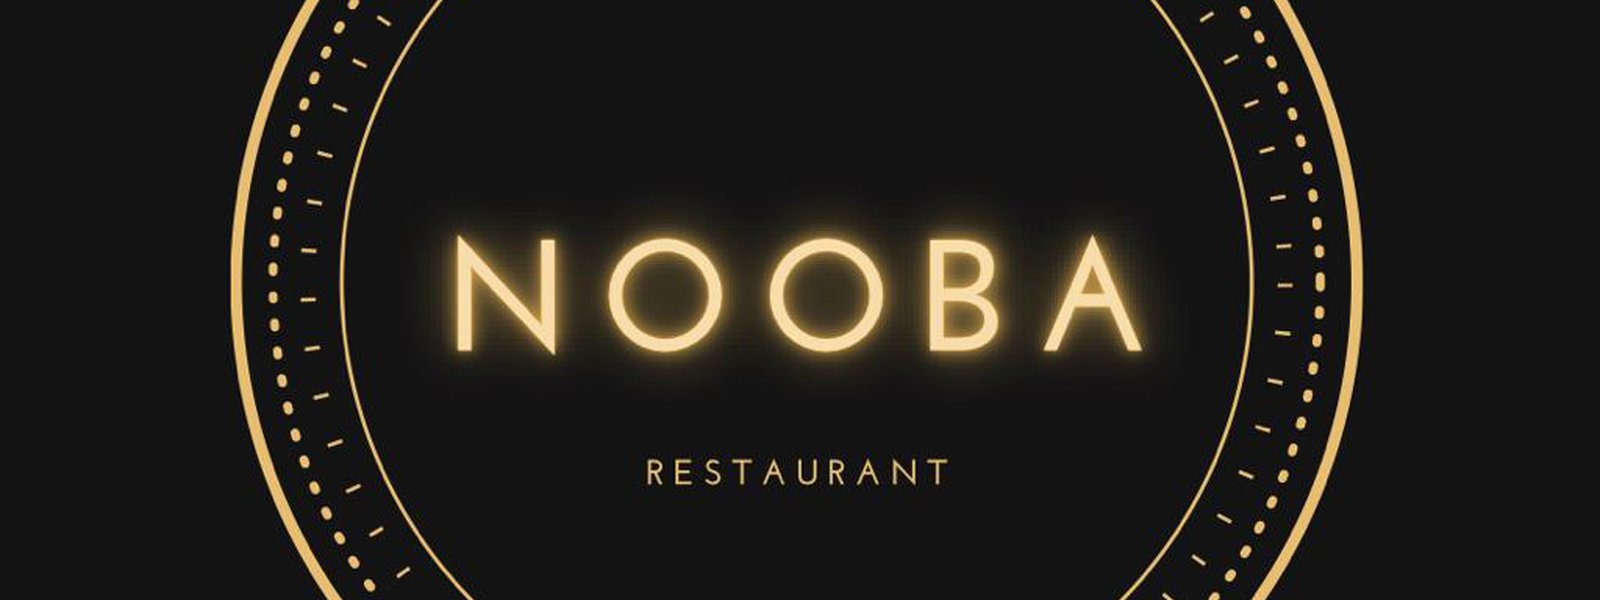 Nooba image header